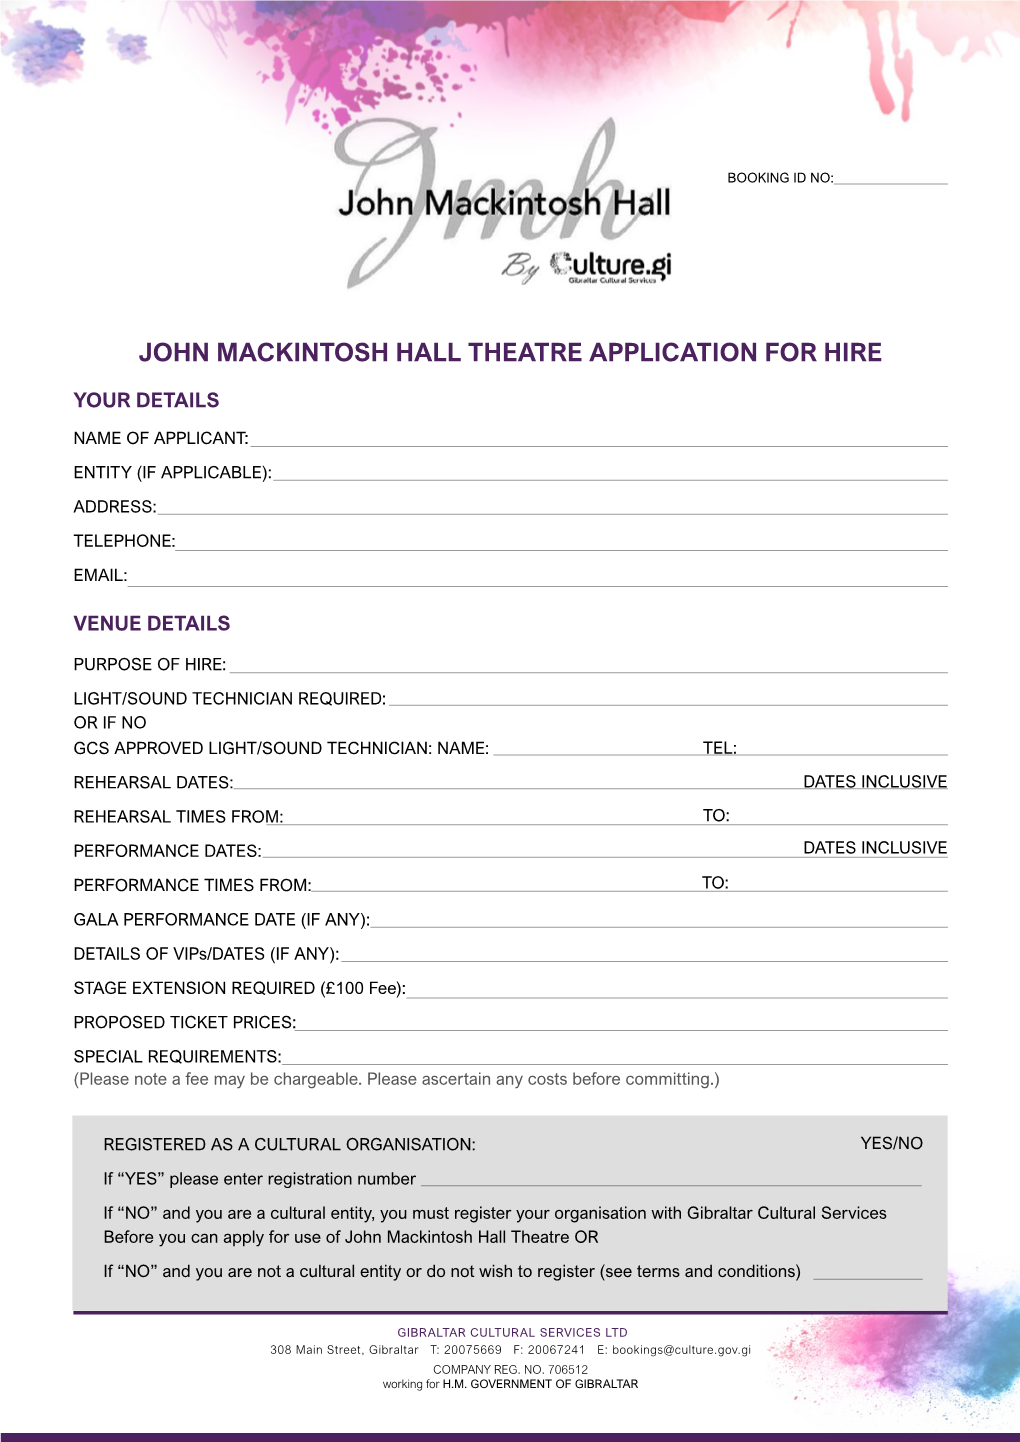 John Mackintosh Hall Theatre Application for Hire